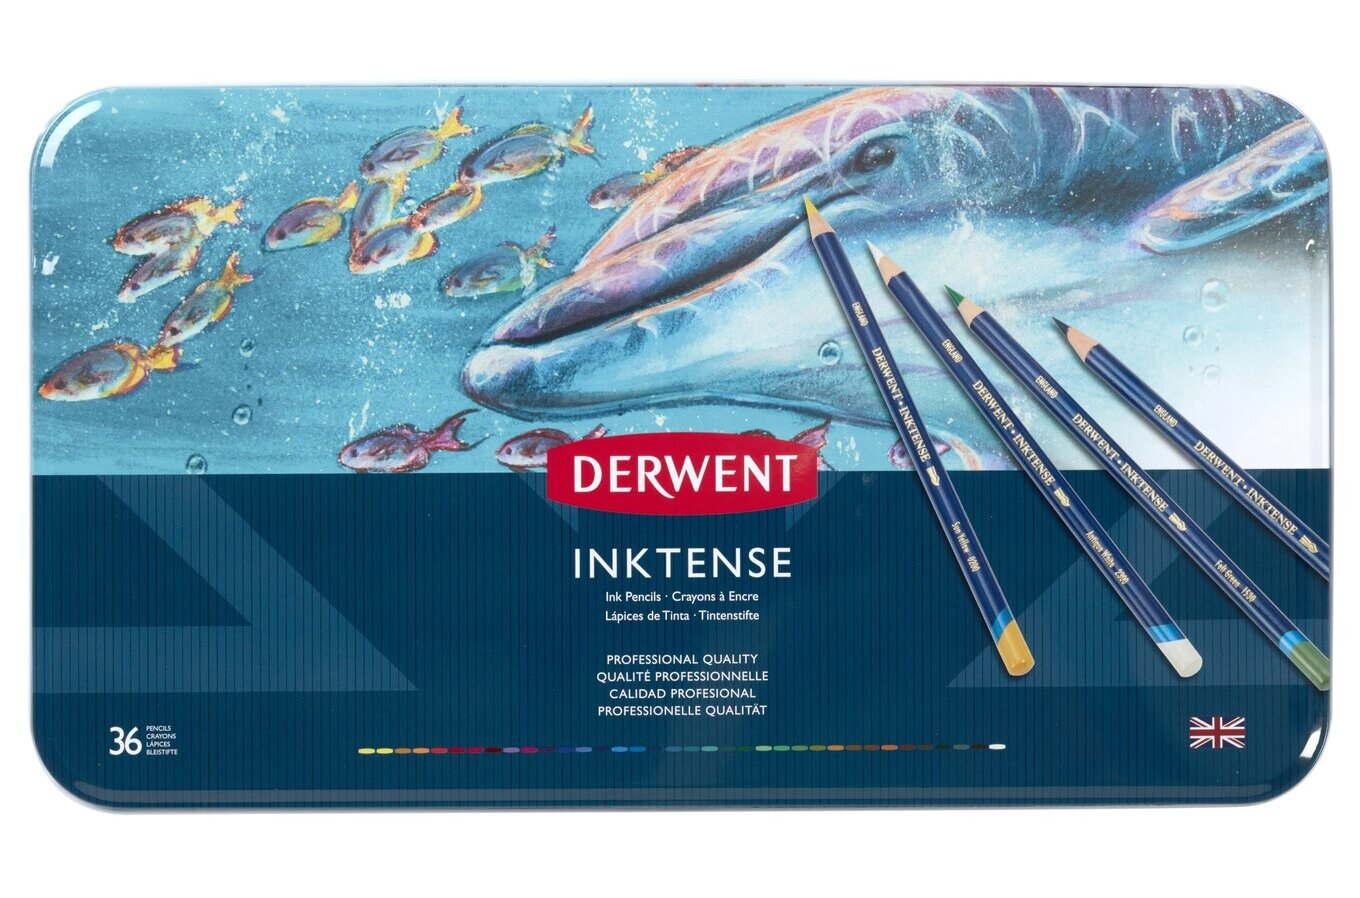 Derwent Inktense Pencils, 4mm Core, Pencils